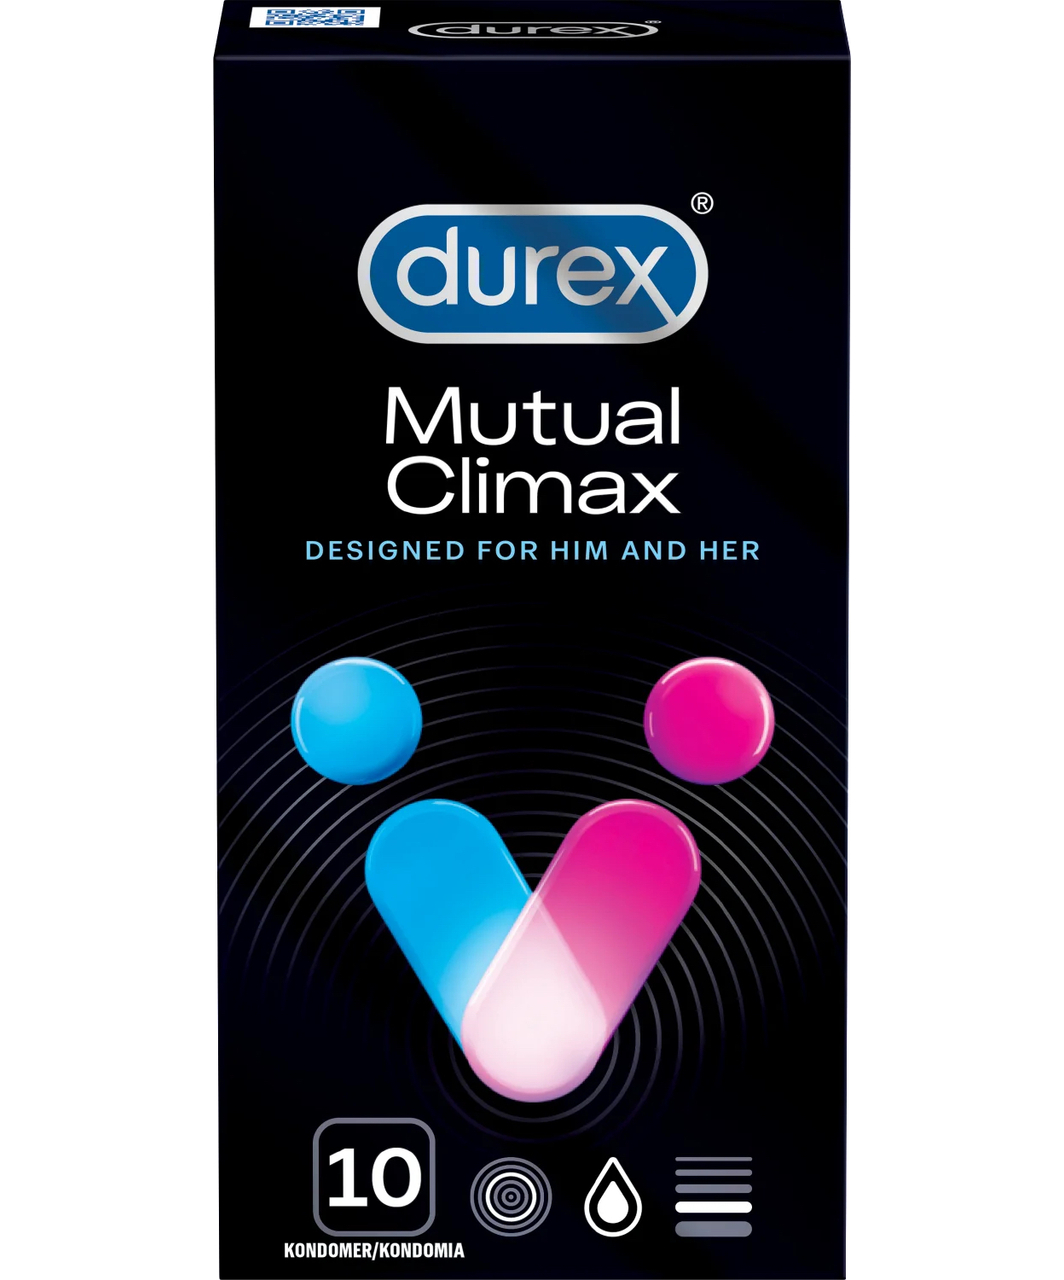 Durex Mutual Climax condoms (10 pcs)